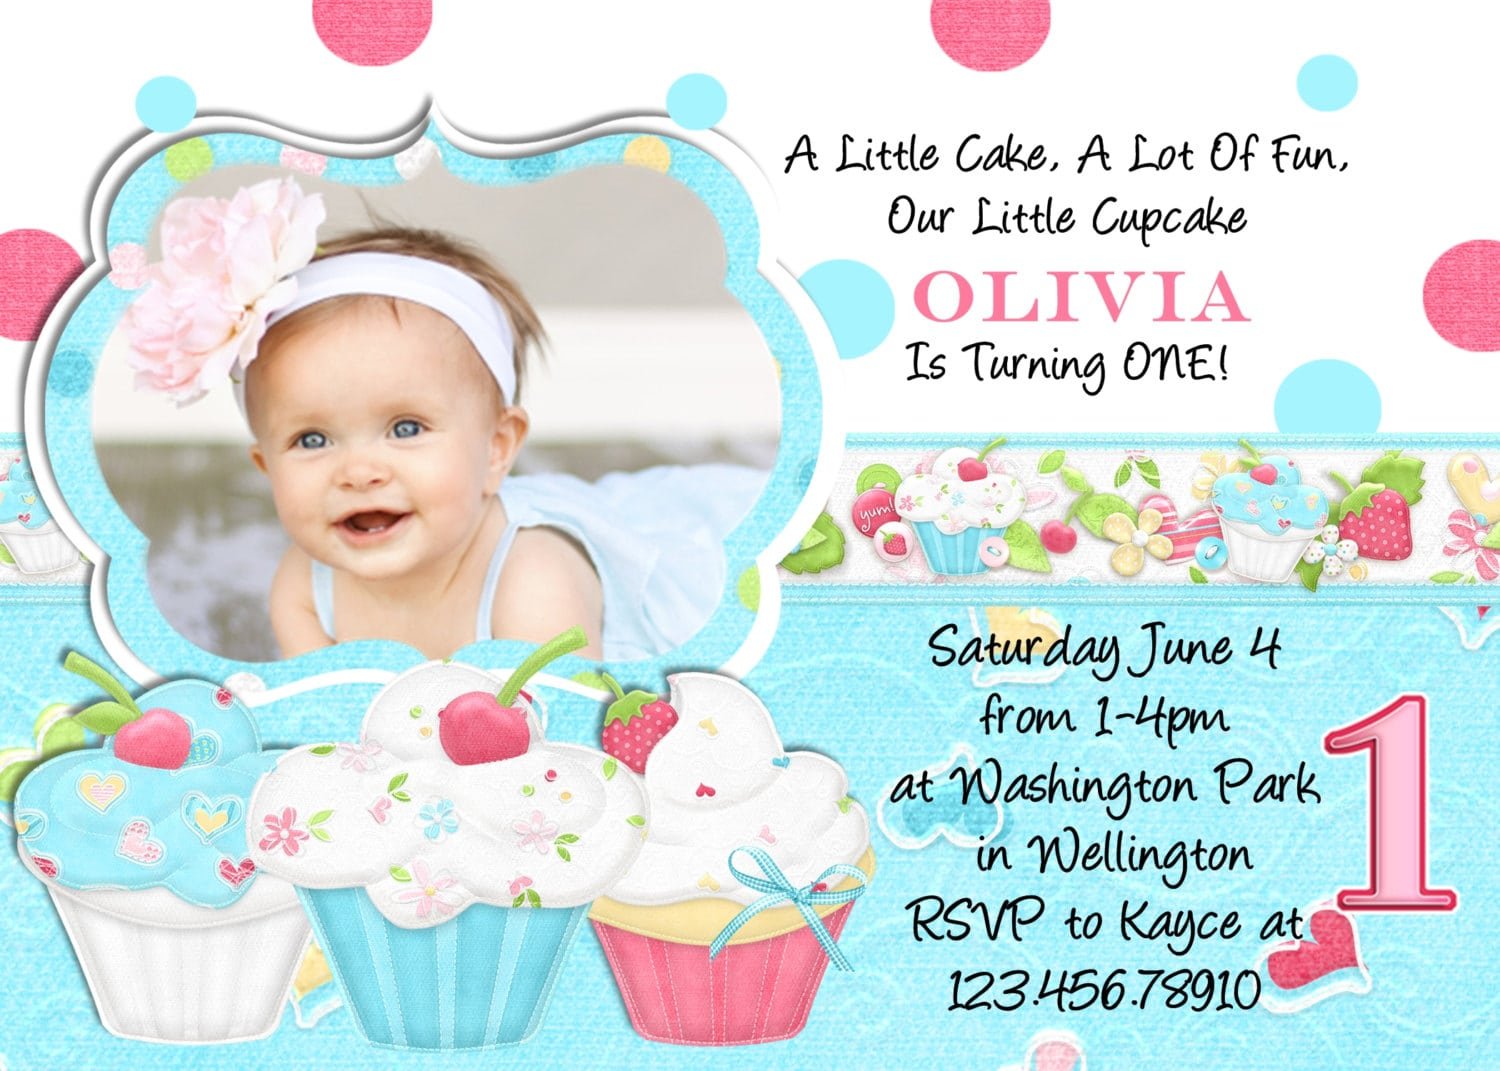 Cupcake Birthday Invitation â Podpedia Invitation